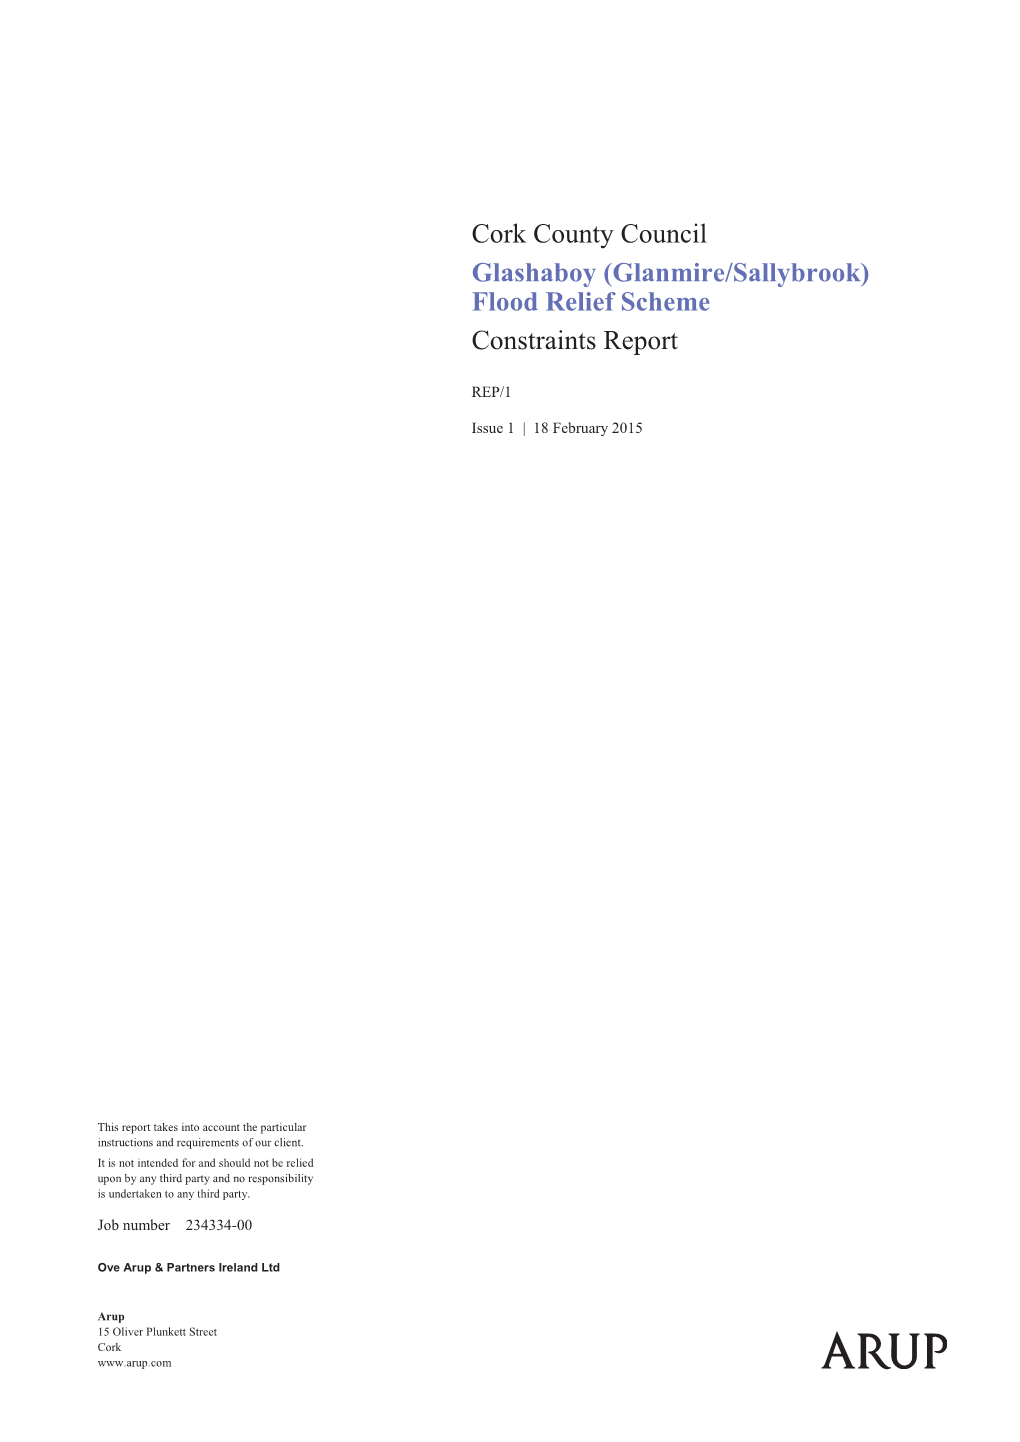 Cork County Council Glashaboy (Glanmire/Sallybrook) Flood Relief Scheme Constraints Report